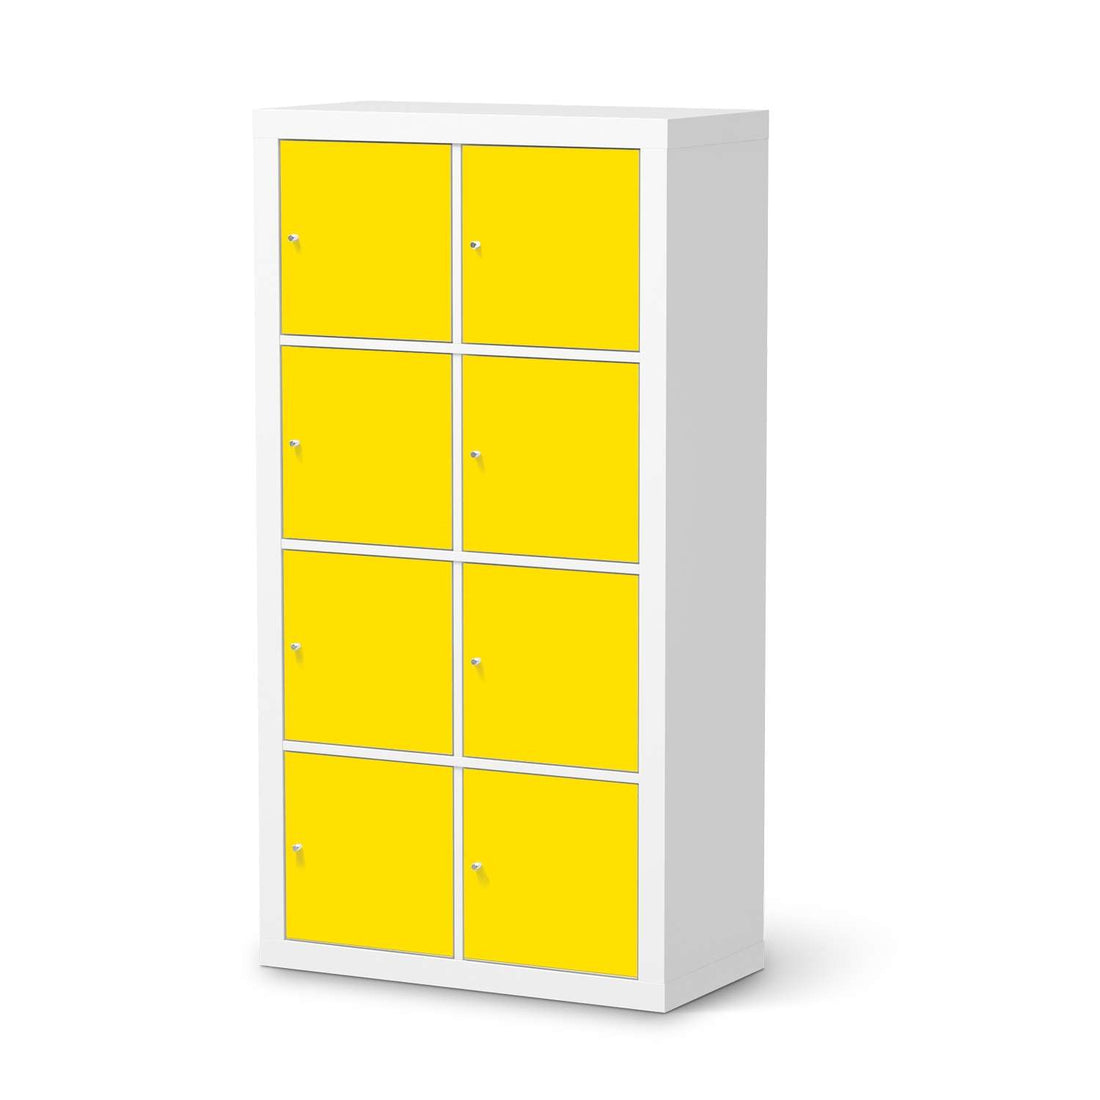 Klebefolie Gelb Dark - IKEA Expedit Regal 8 Türen  - weiss